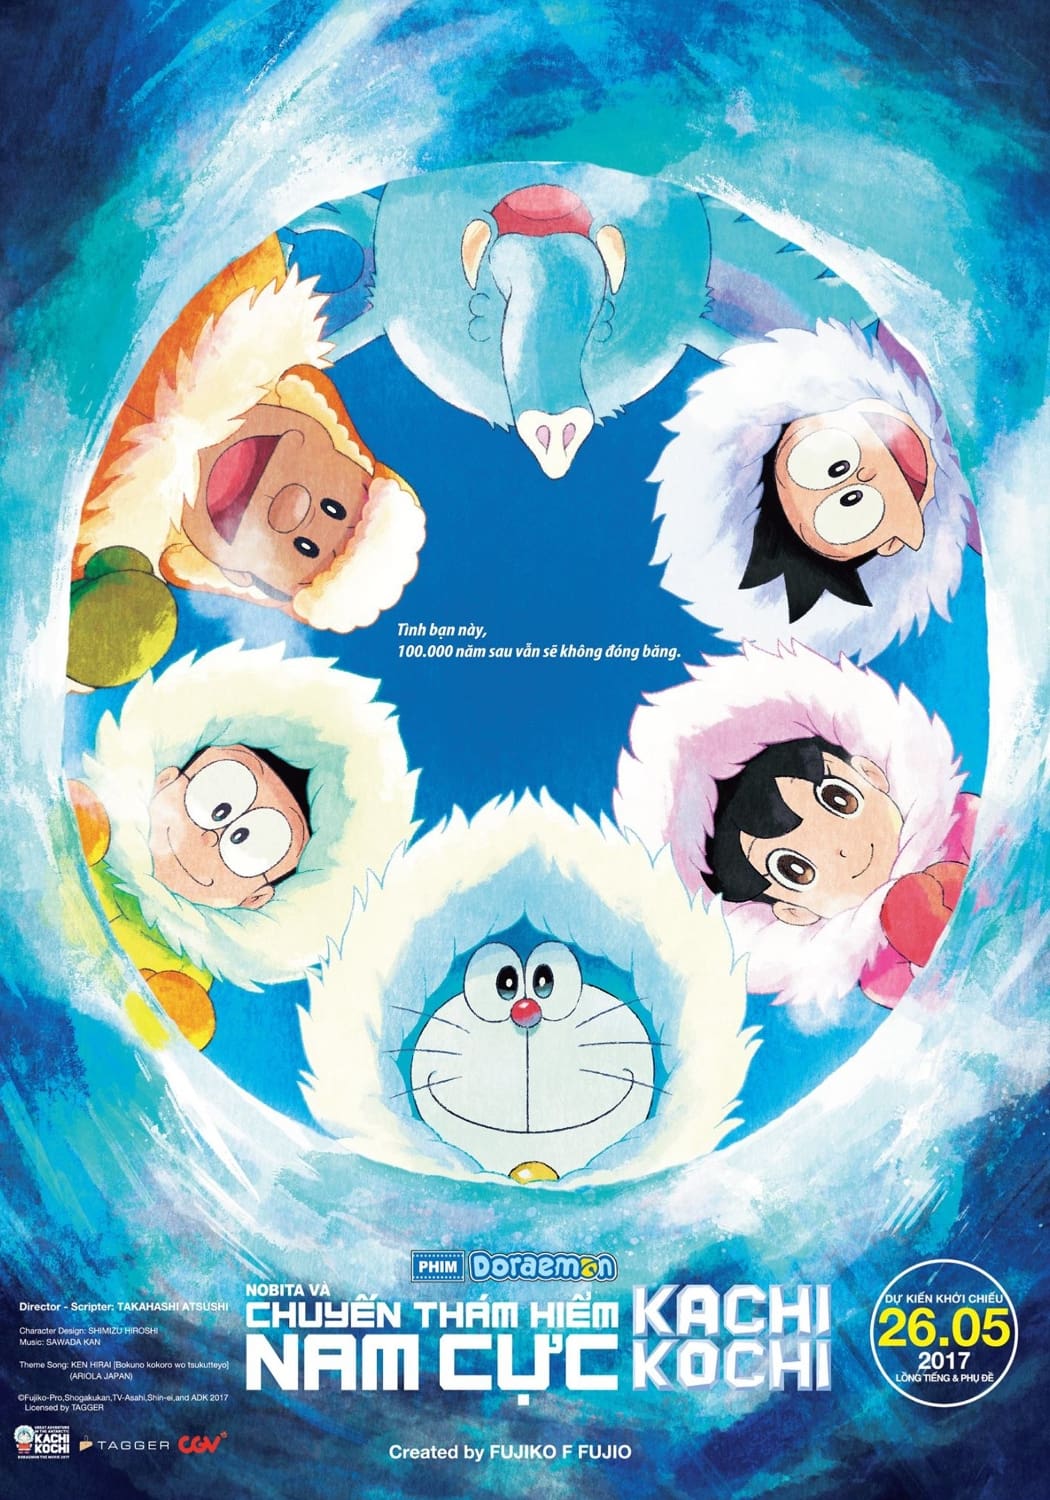 Banner Phim Doraemon: Nobita và Chuyến Thám Hiểm Nam Cực Kachi Kochi (Doraemon: Great Adventure in the Antarctic Kachi Kochi)